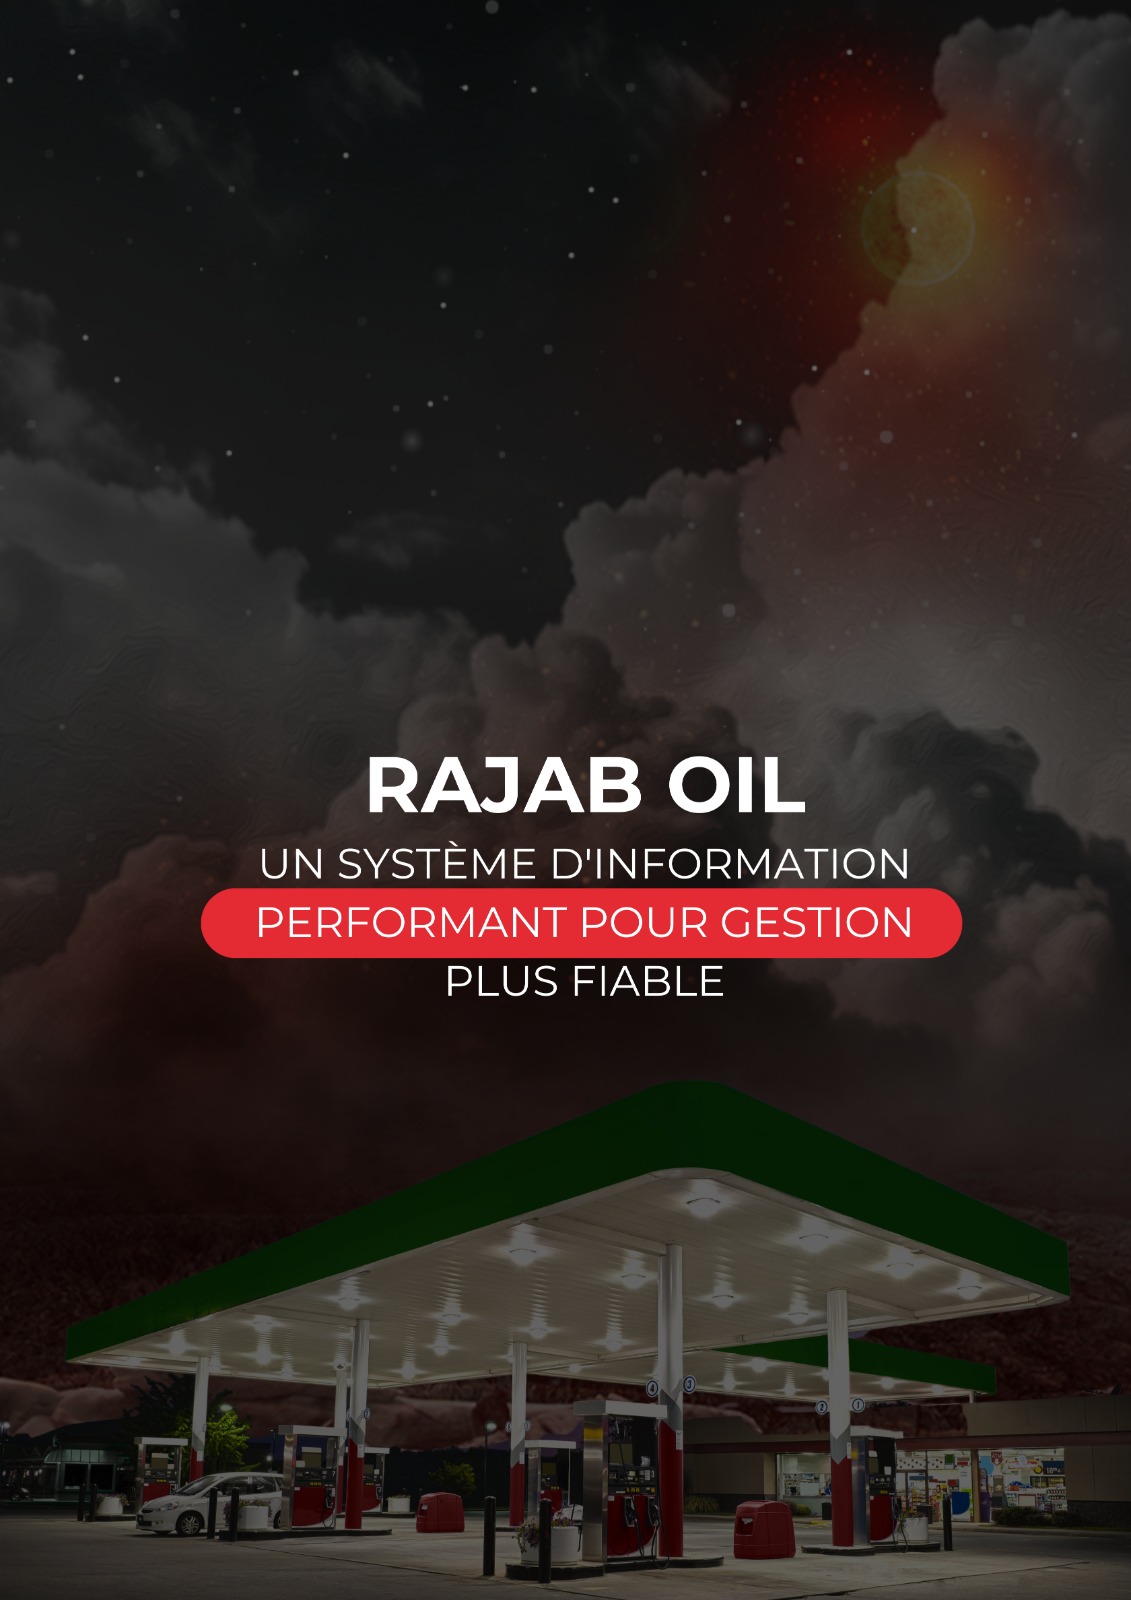 Radiab Oil